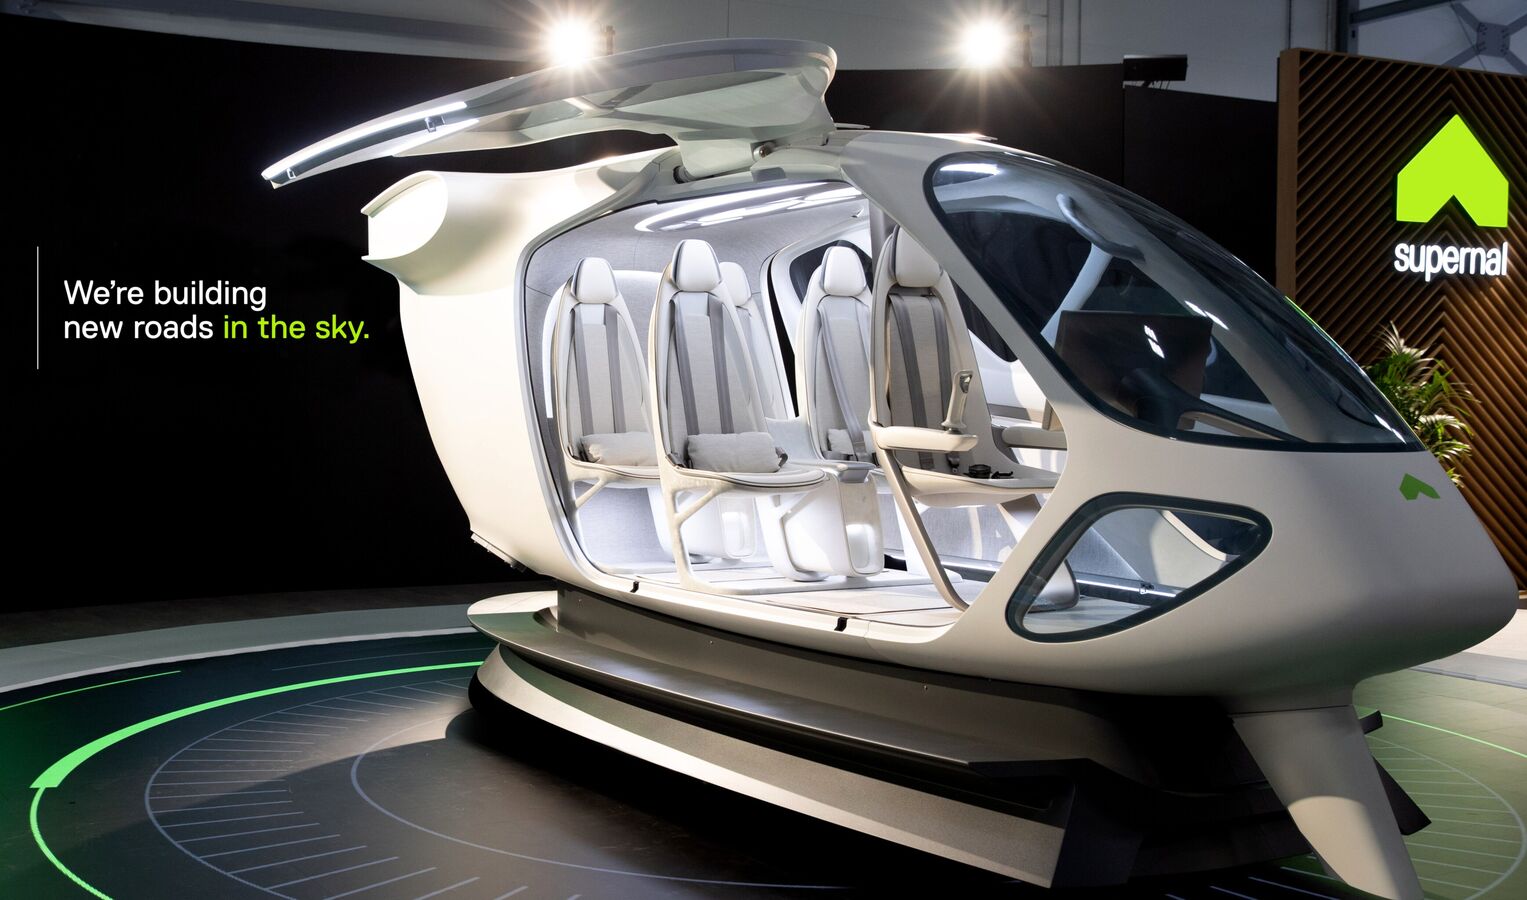 Hyundai Supernal unveils concept cabin of futuristic flying machine